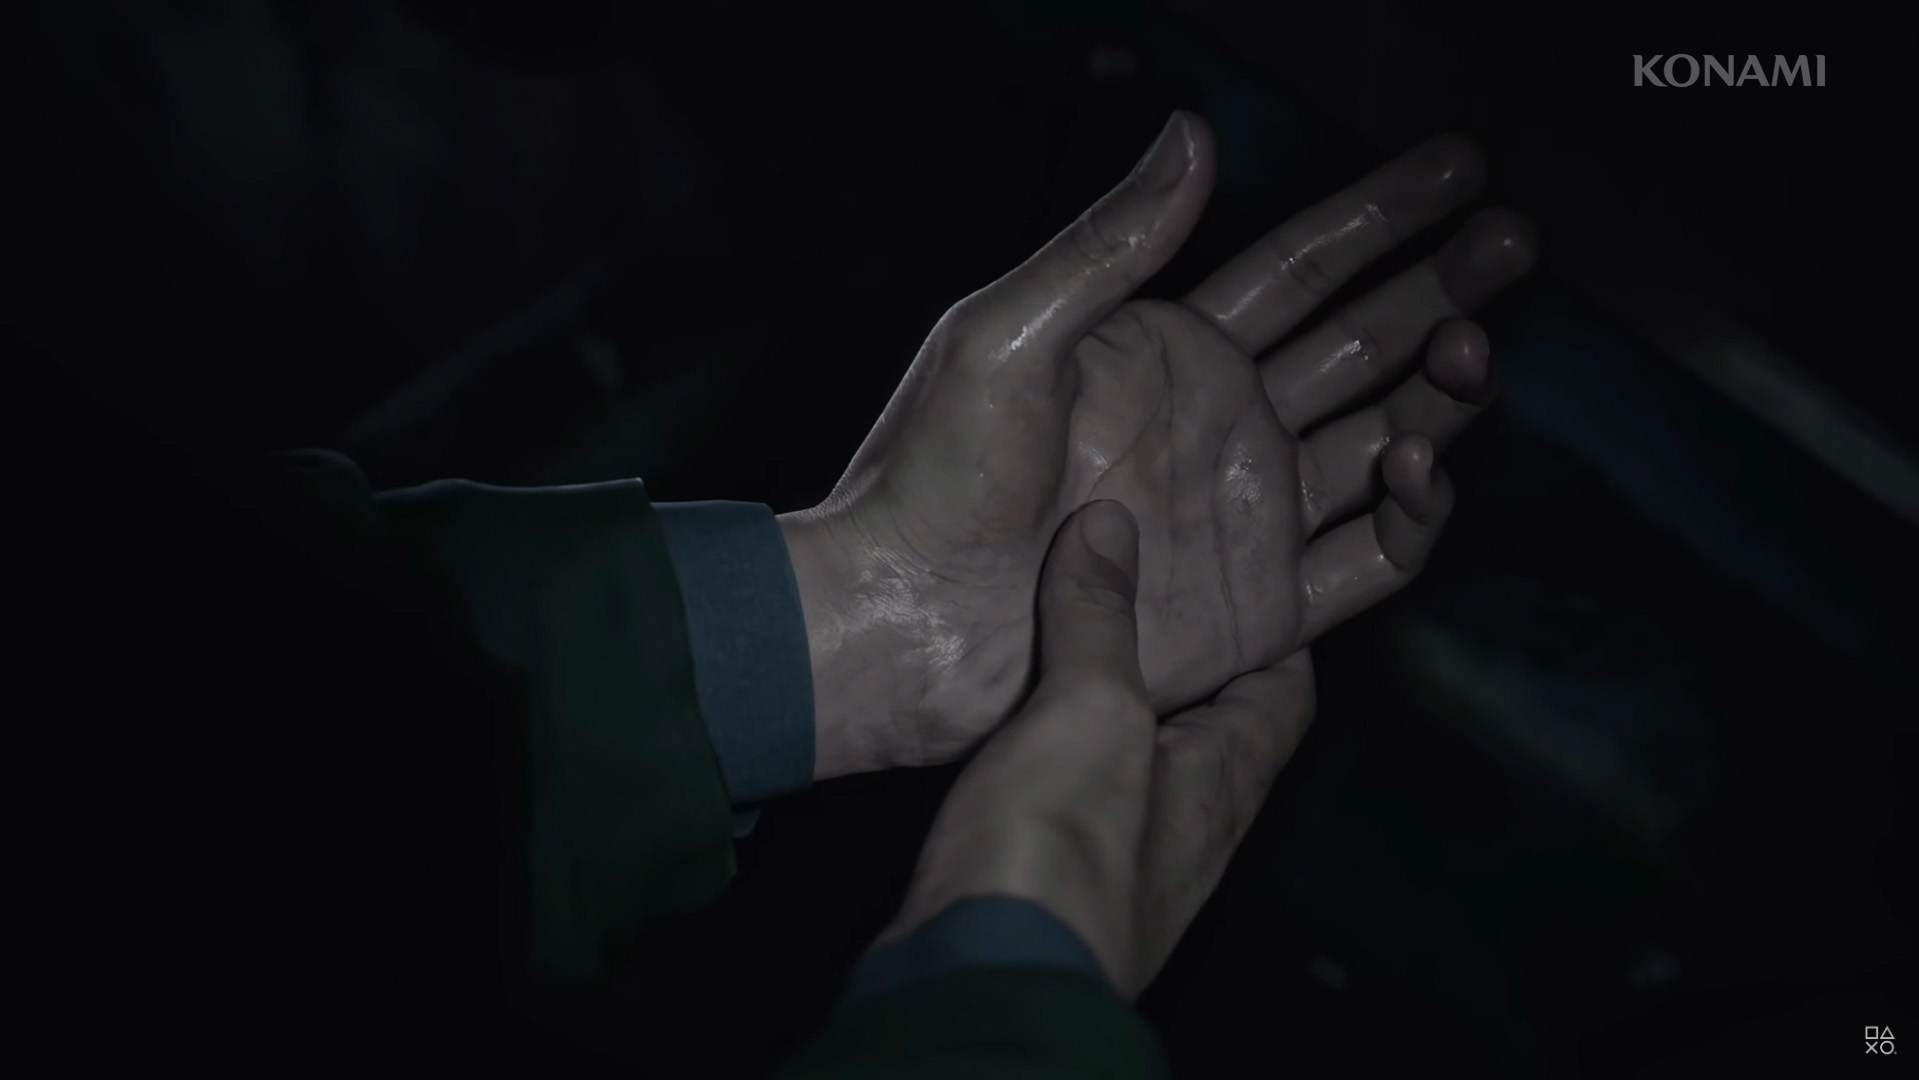 Silent Hill 2 Remake - Trailer 